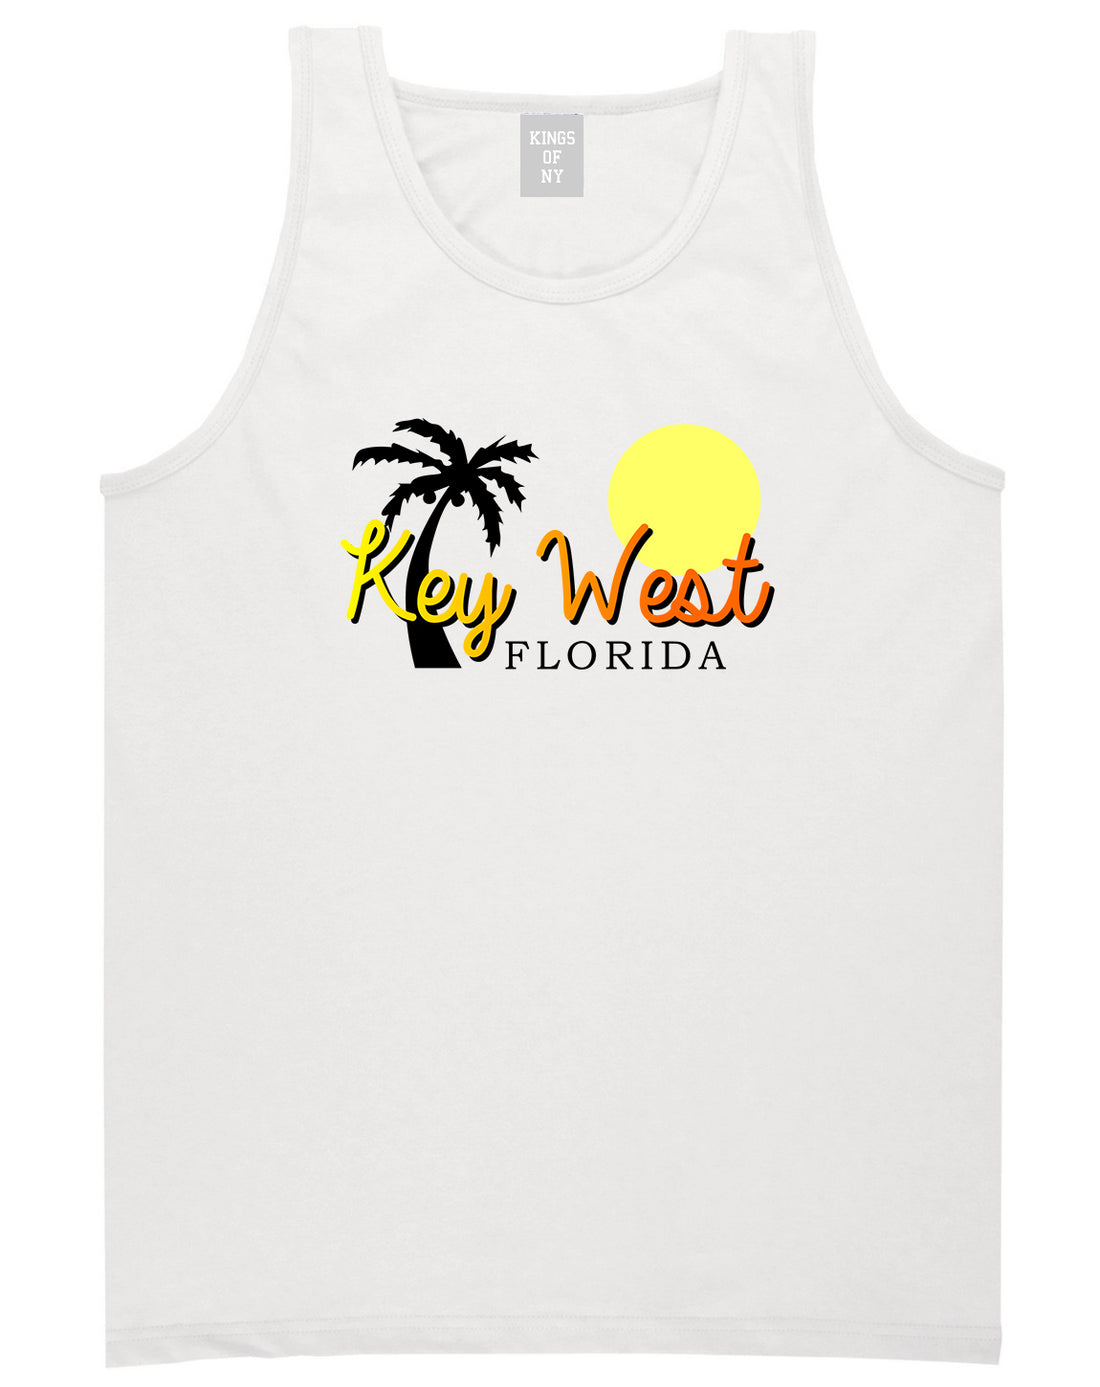 Key West Florida Vacation Mens Tank Top Shirt White